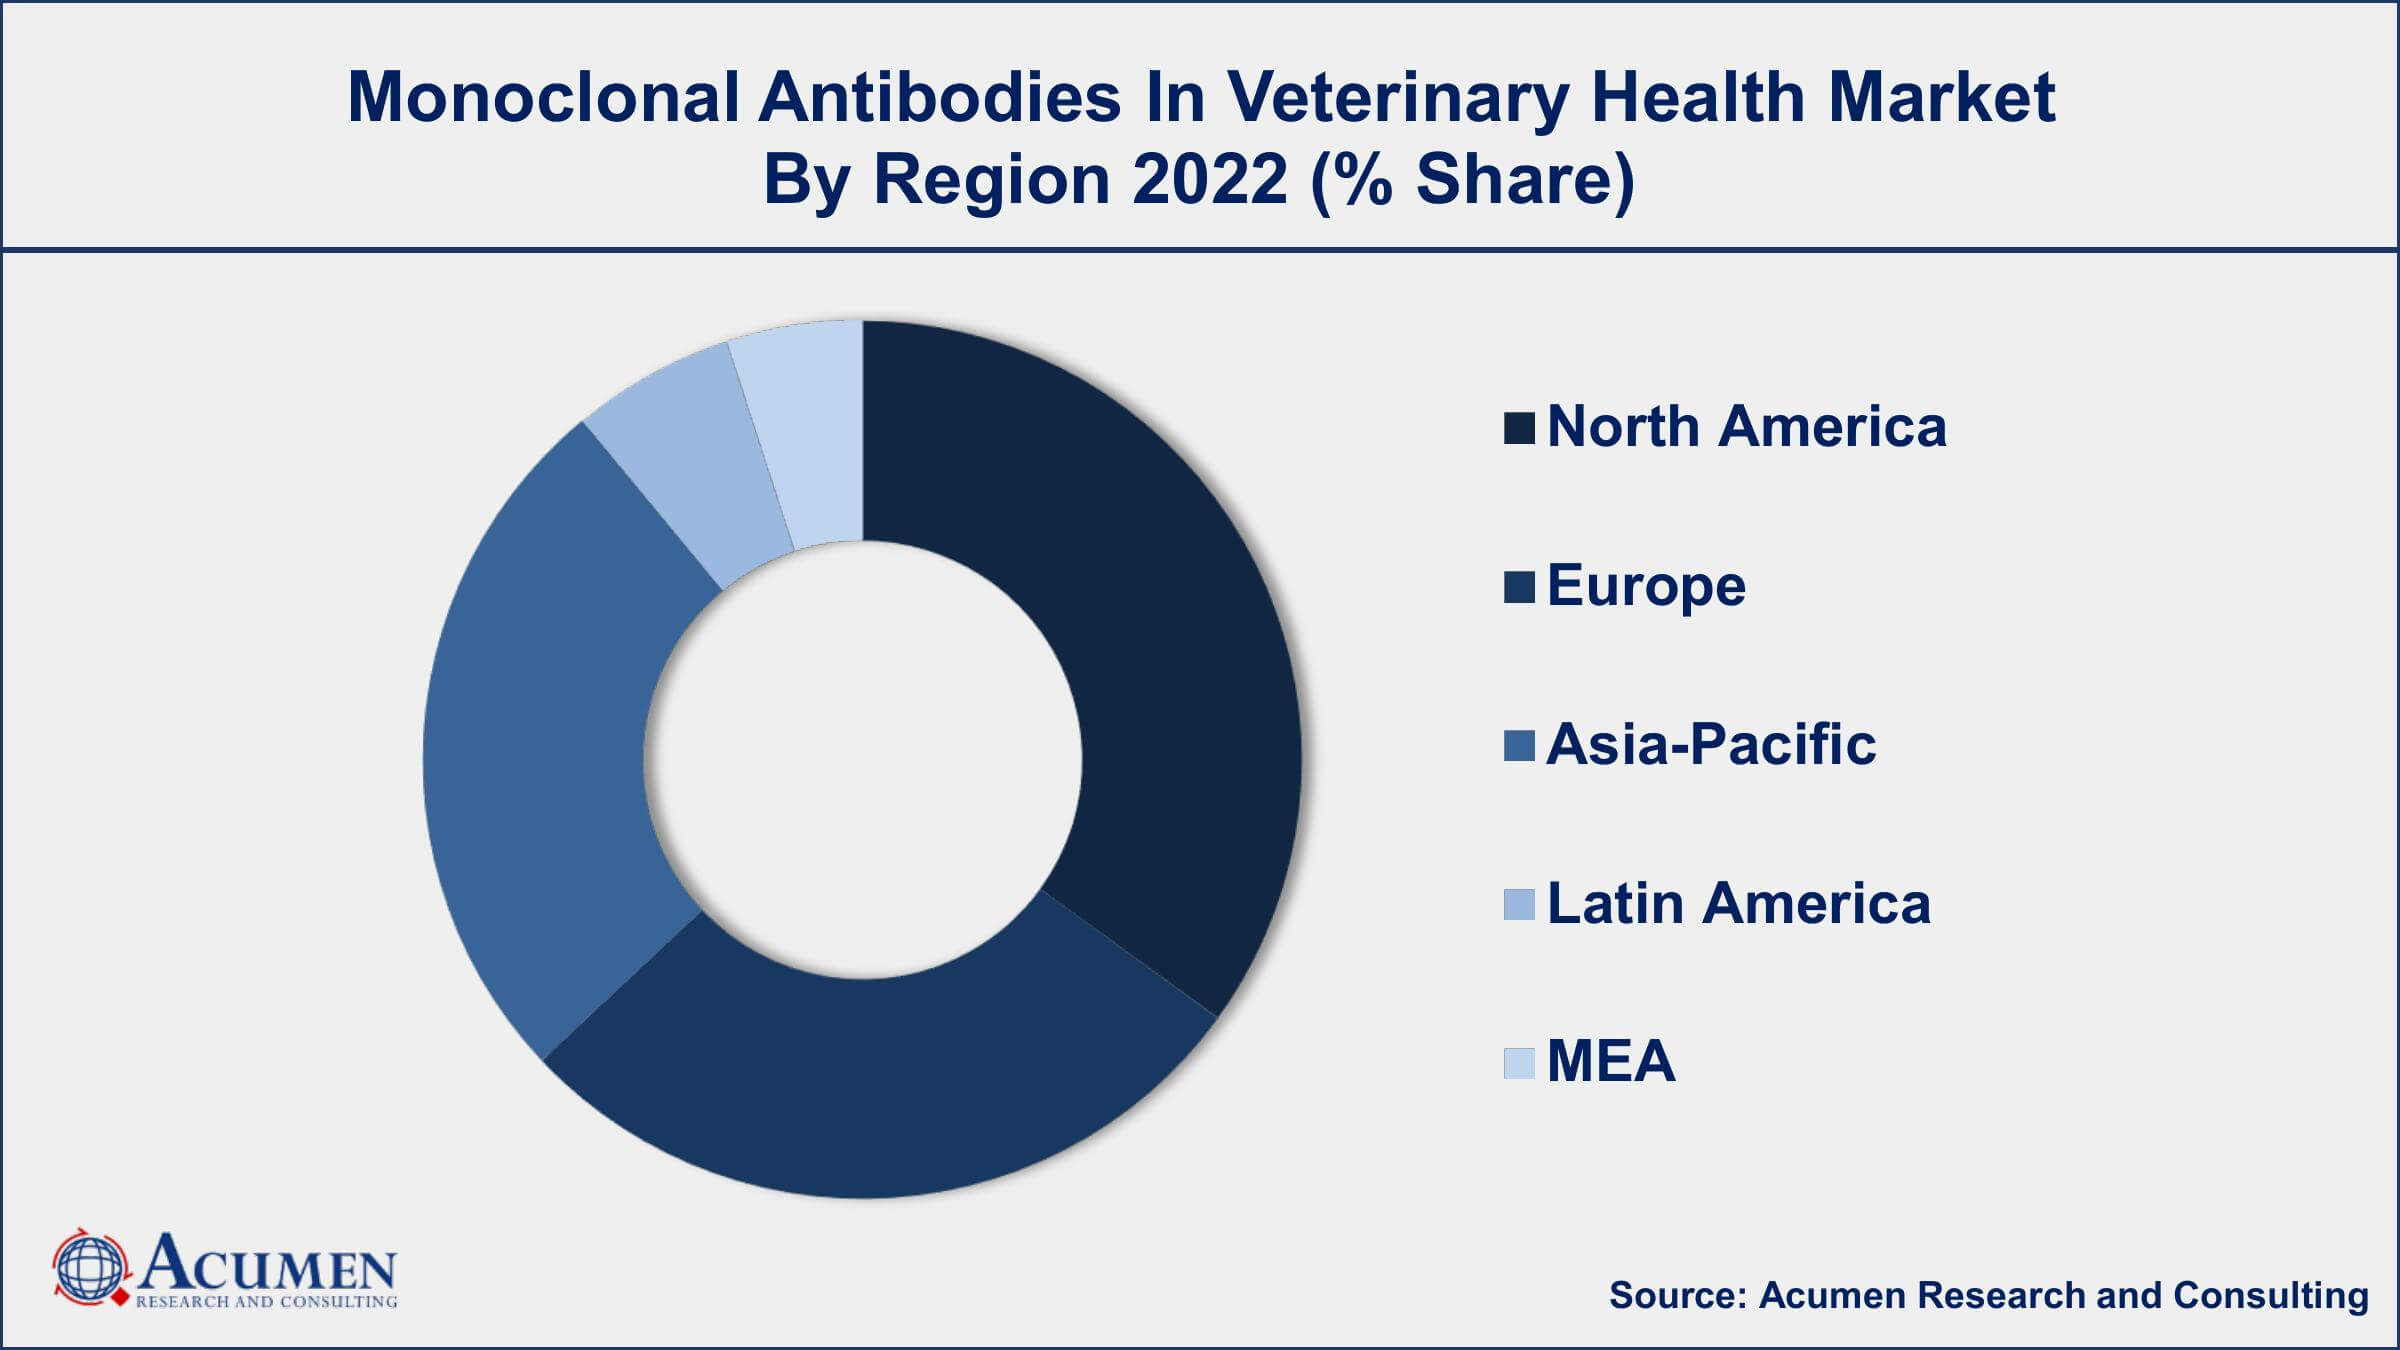 Monoclonal Antibodies in Veterinary Health Market Drivers